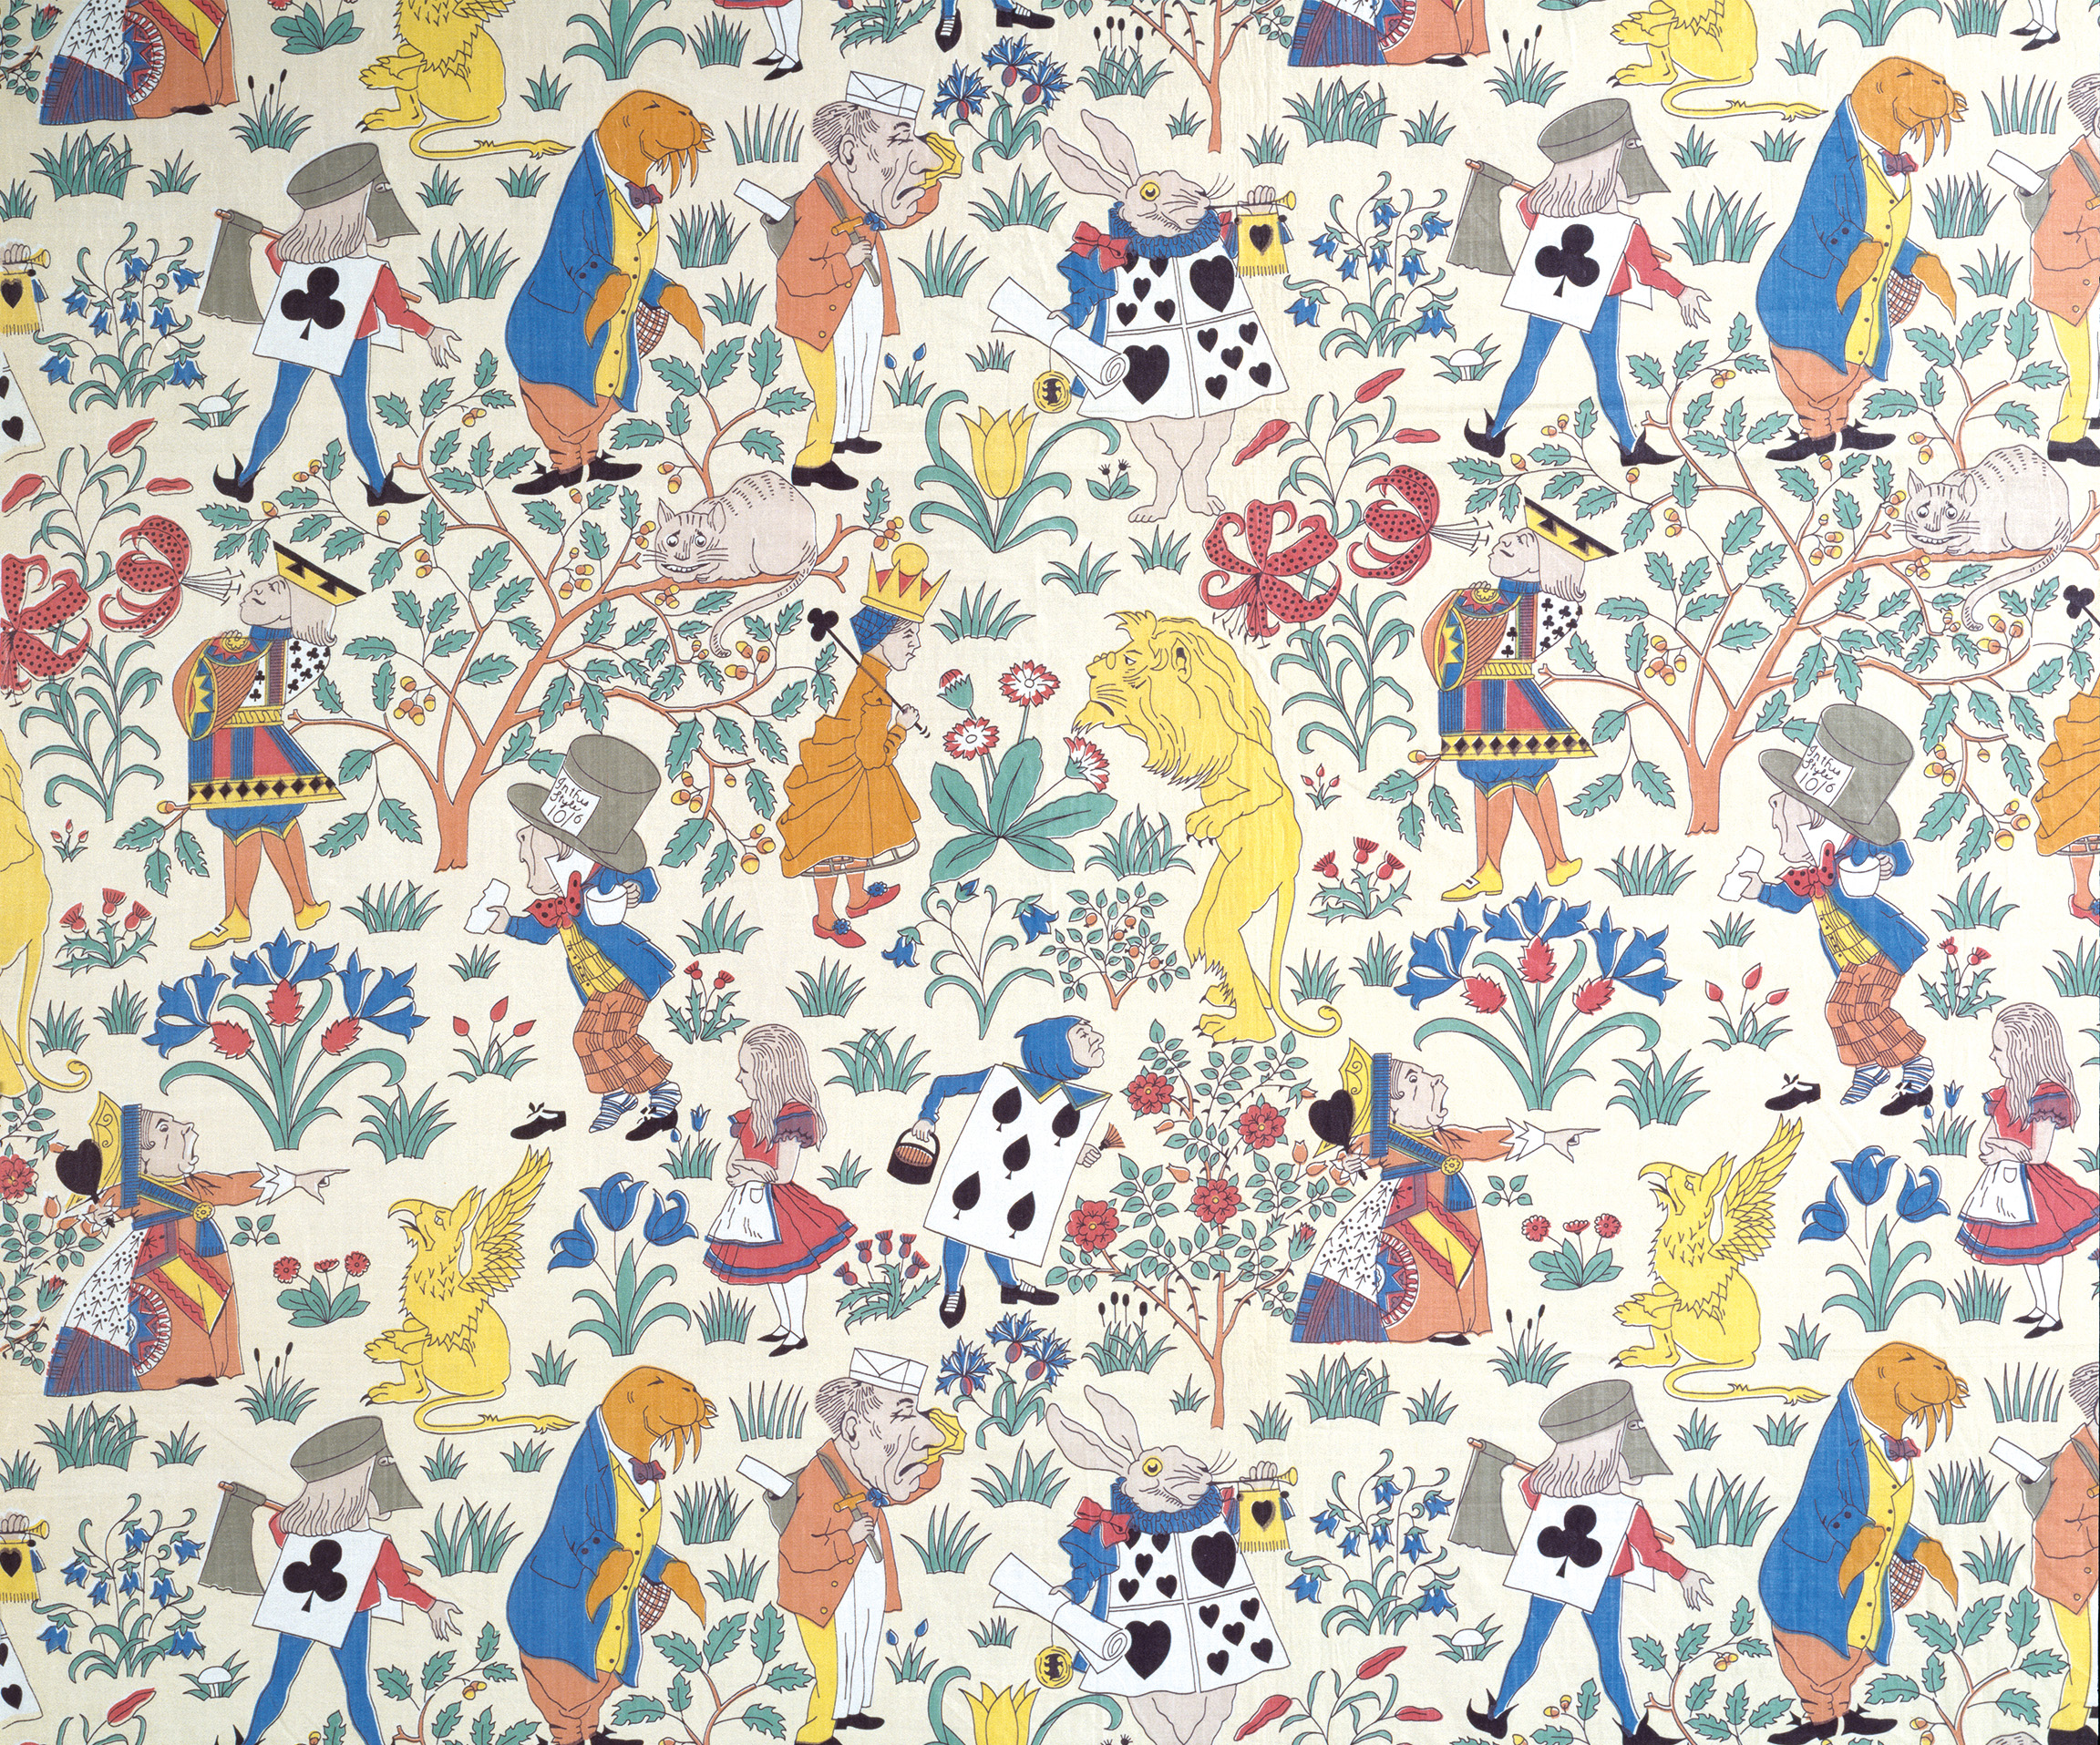 Alice in Wonderland Textile Design